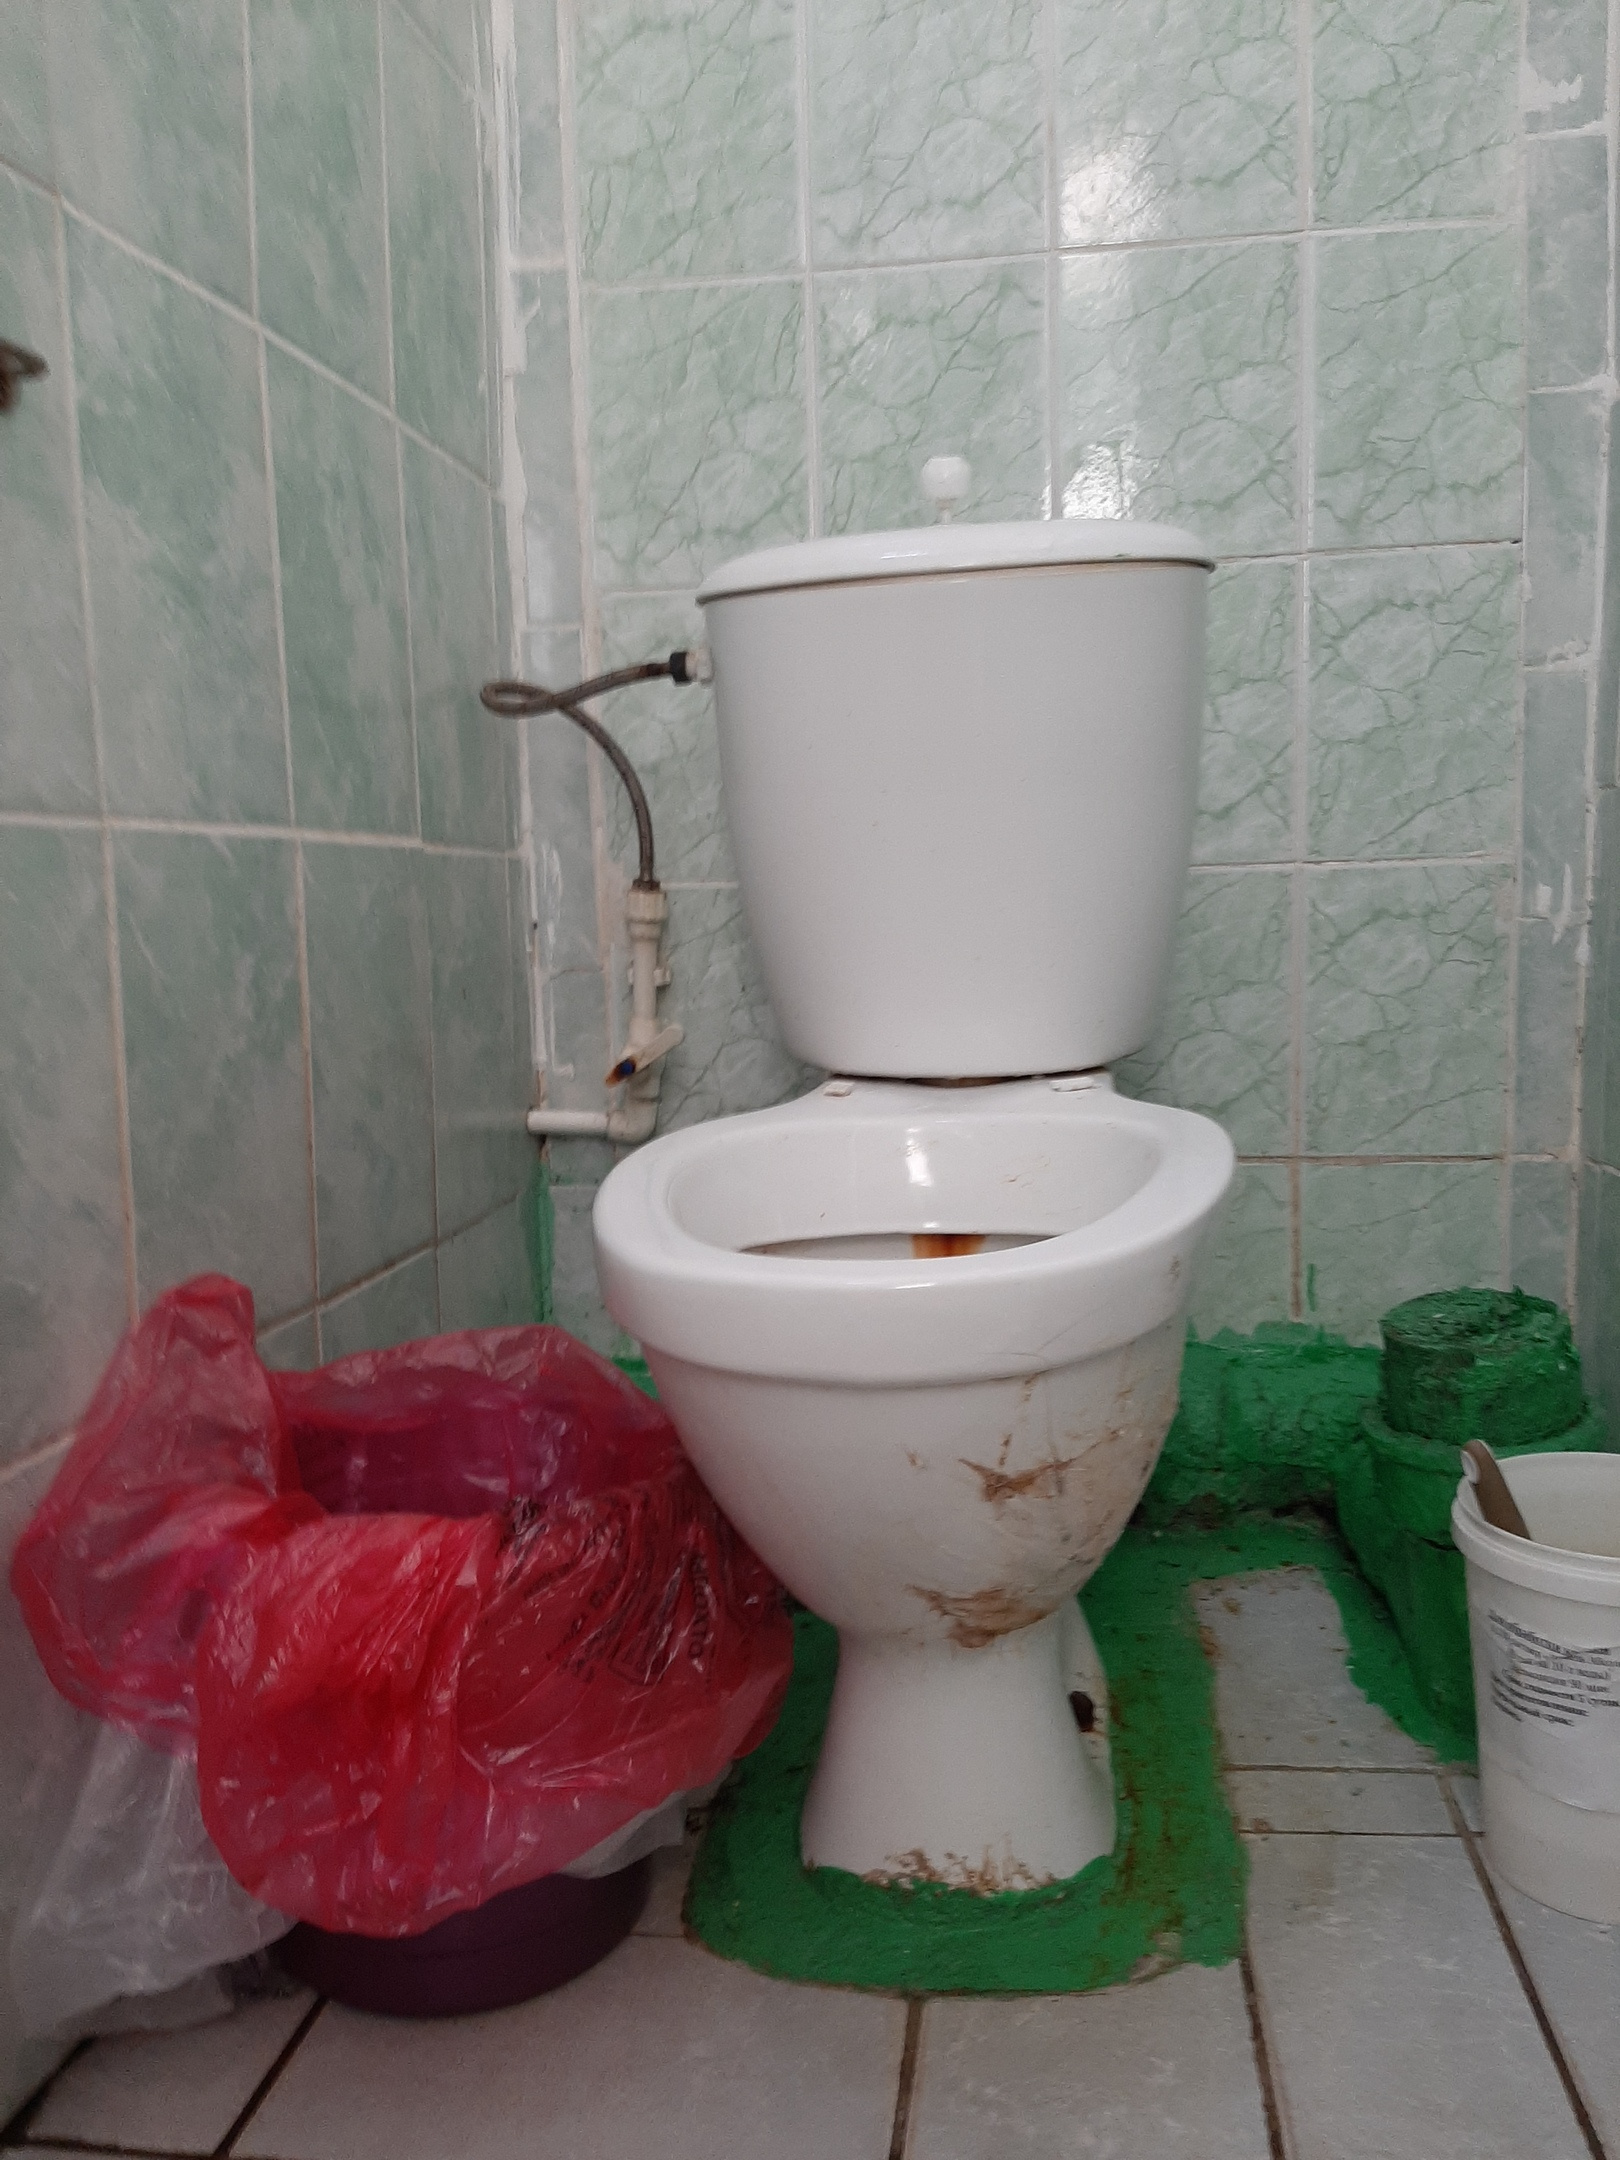 В туалете дела обстоят хуже — на унитазе неприятные пятна и ржавчина